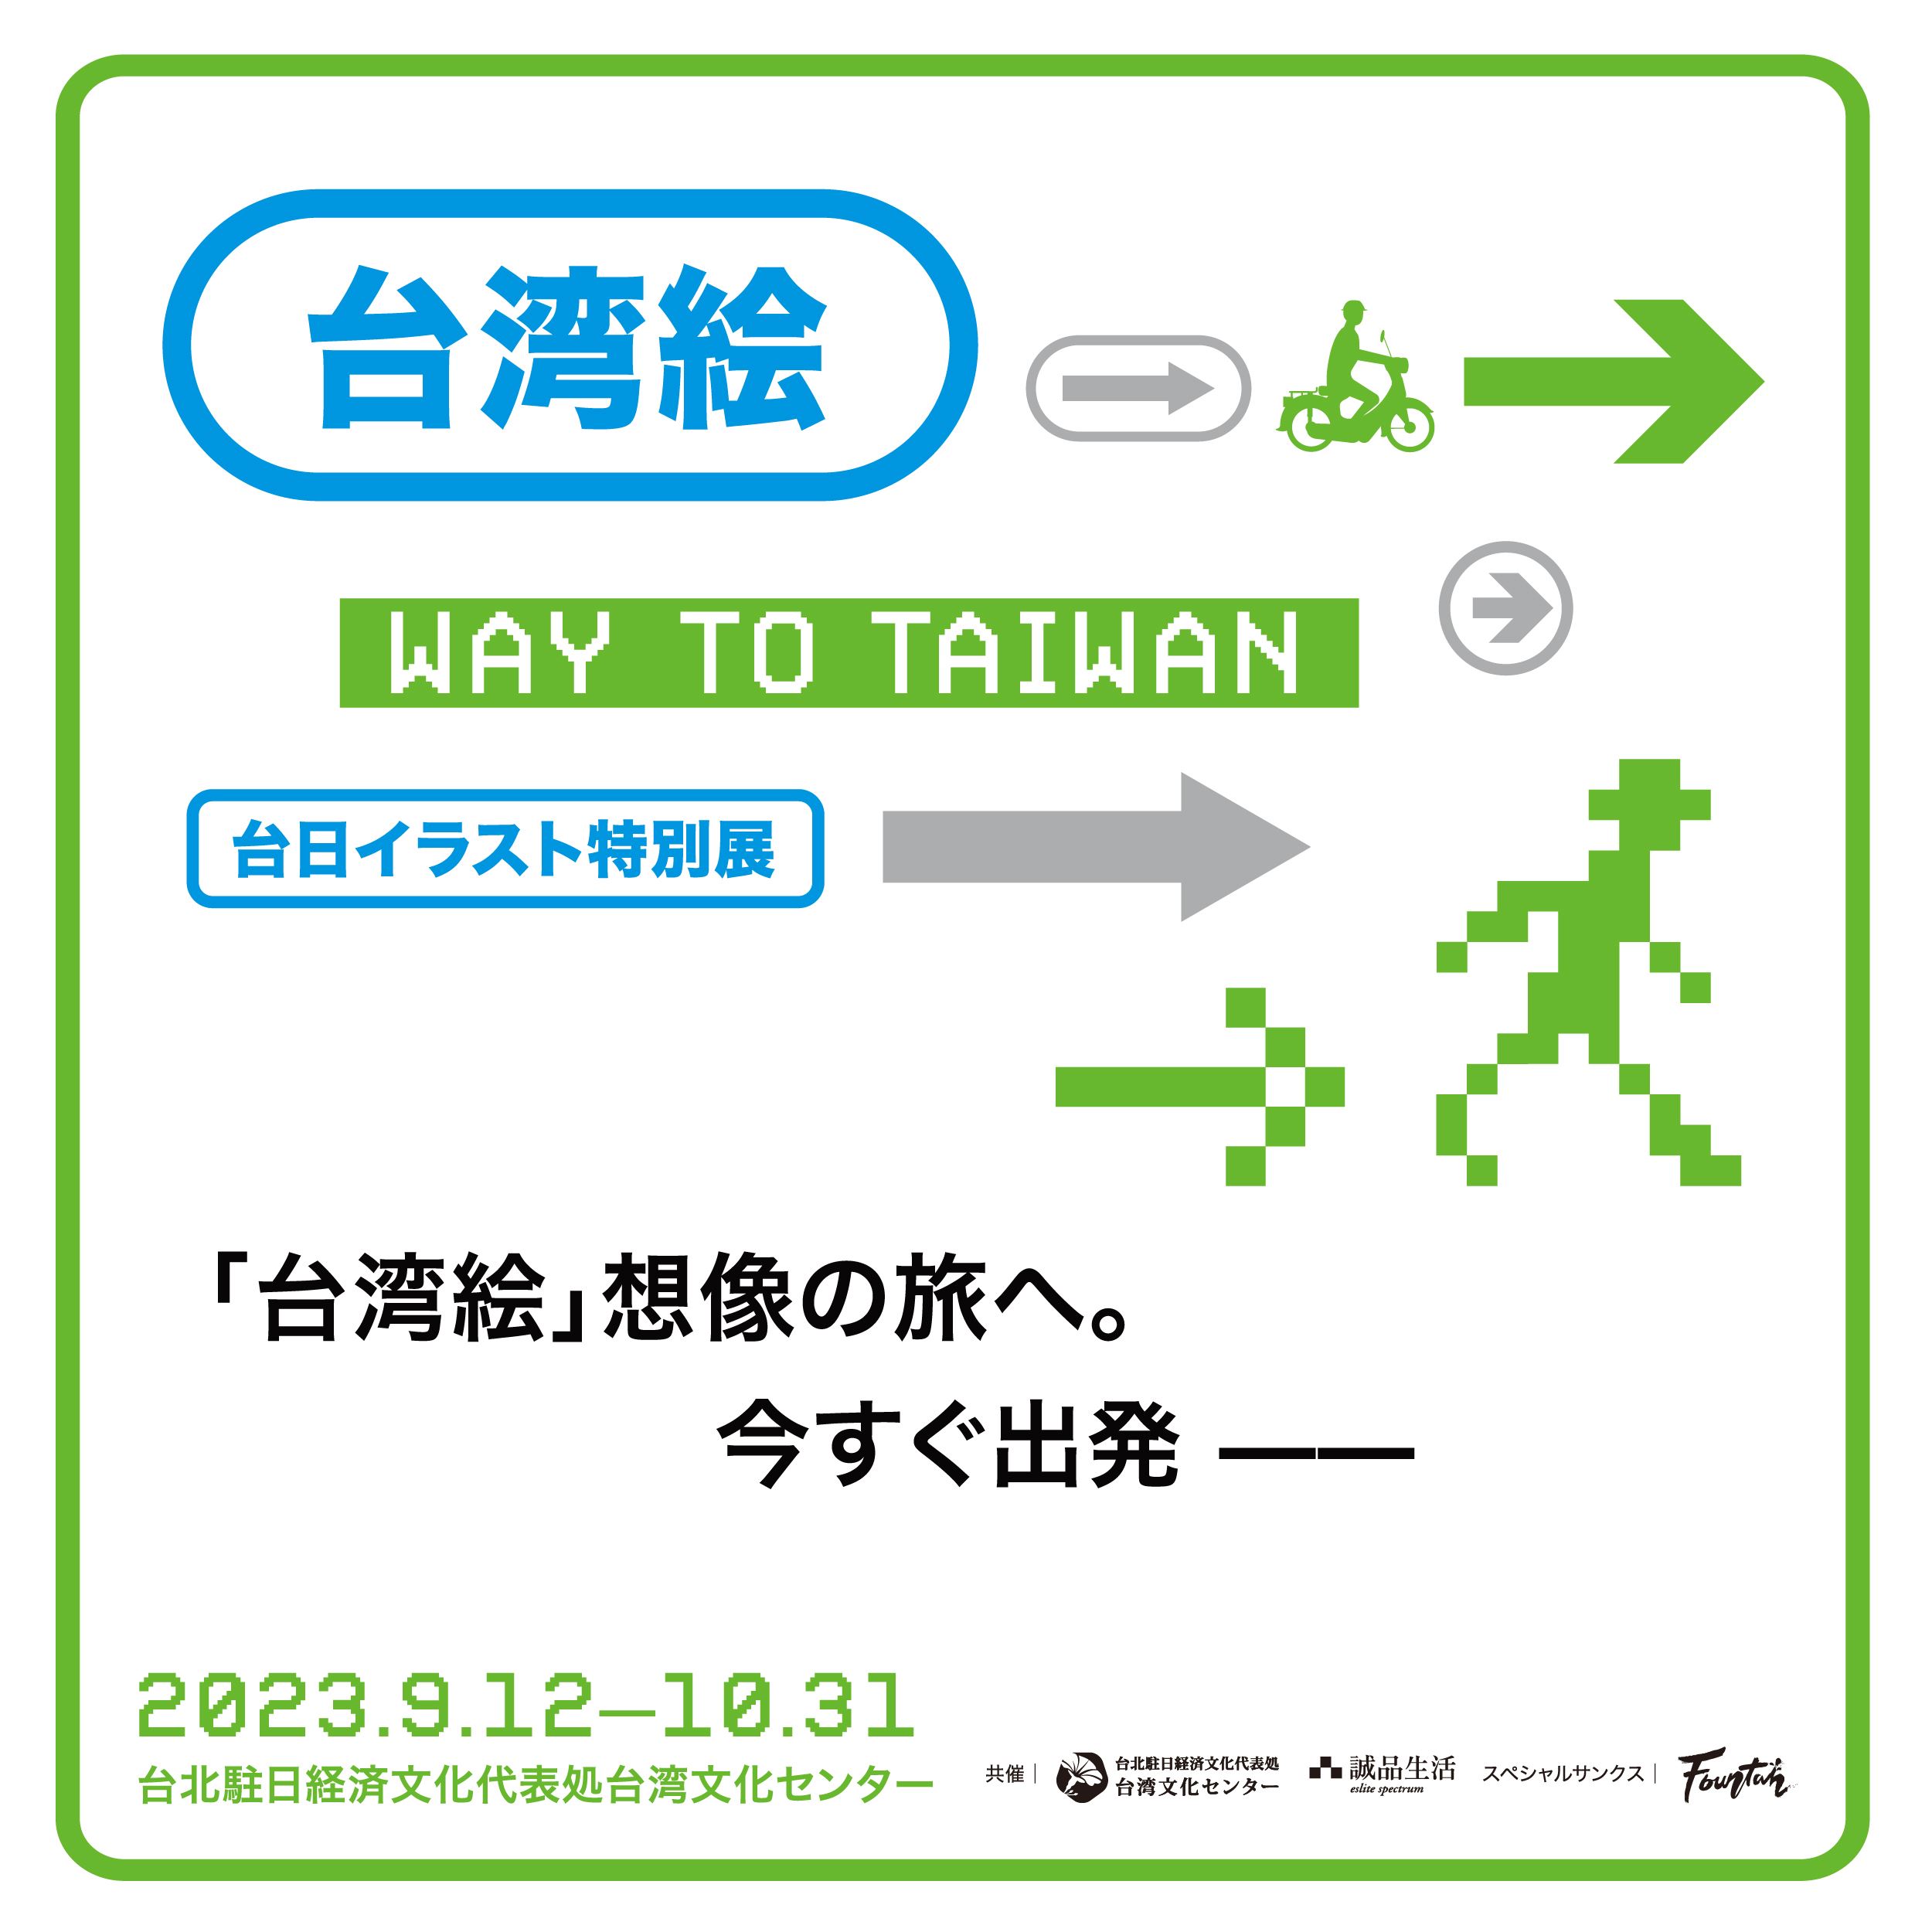 https://jp.taiwan.culture.tw/News_Content2.aspx?n=365&s=167711